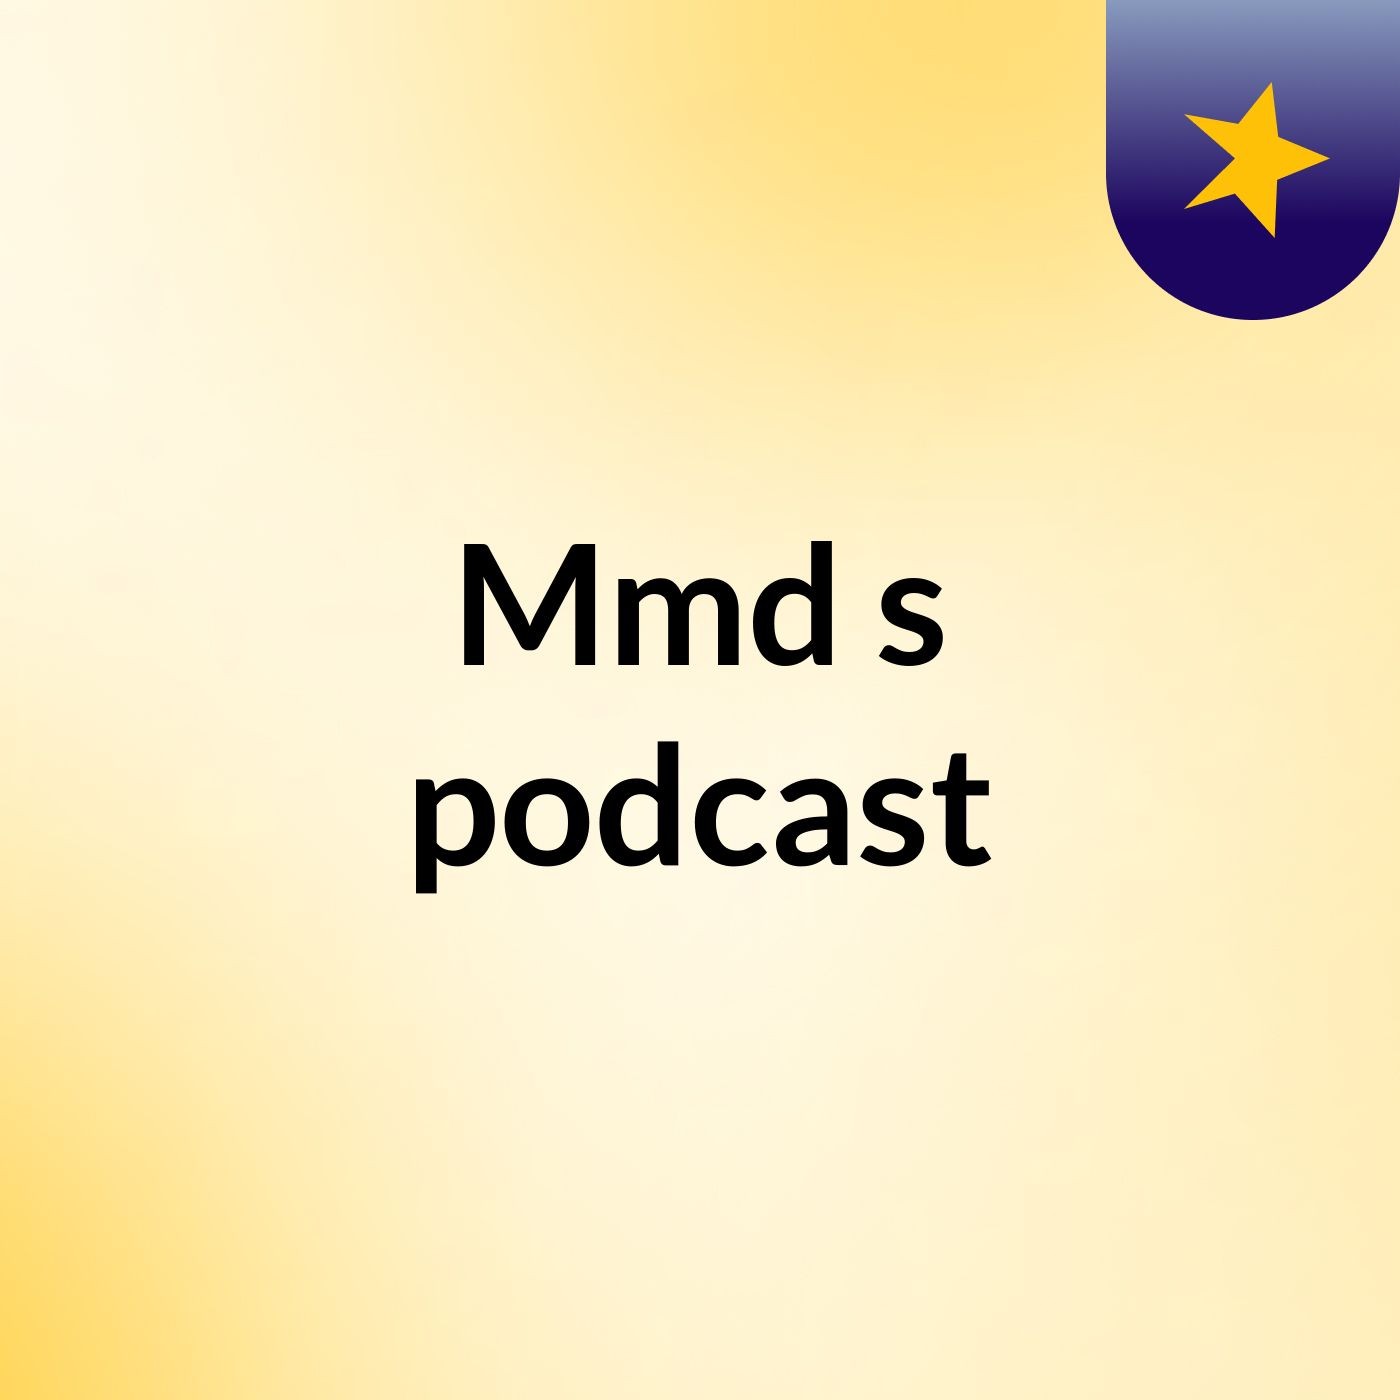 Mmd's podcast